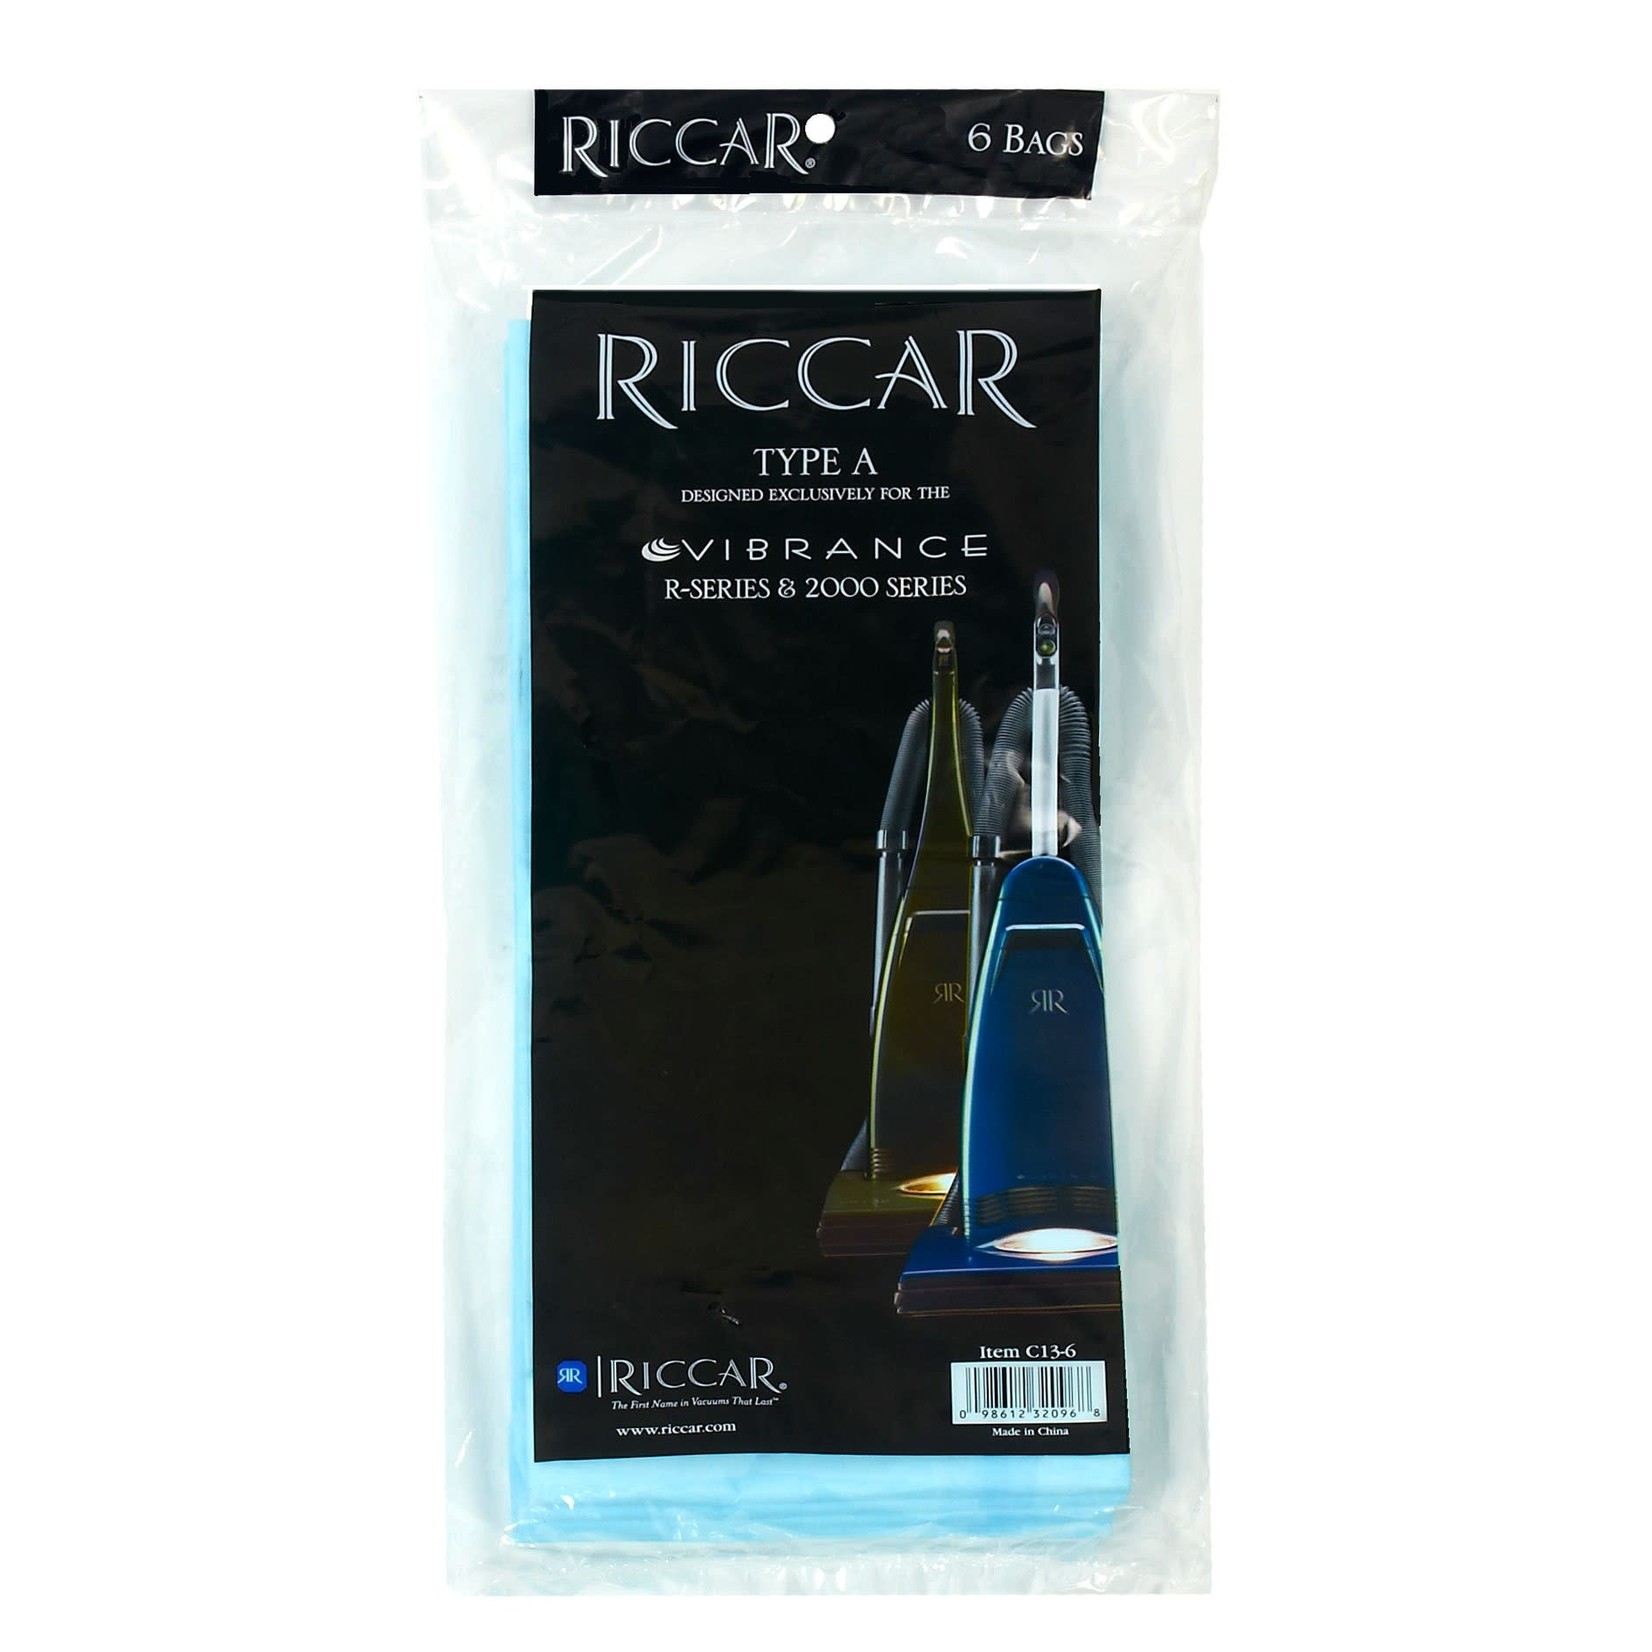 Riccar Riccar Type "A" Paper Bag (6pk) C13-6